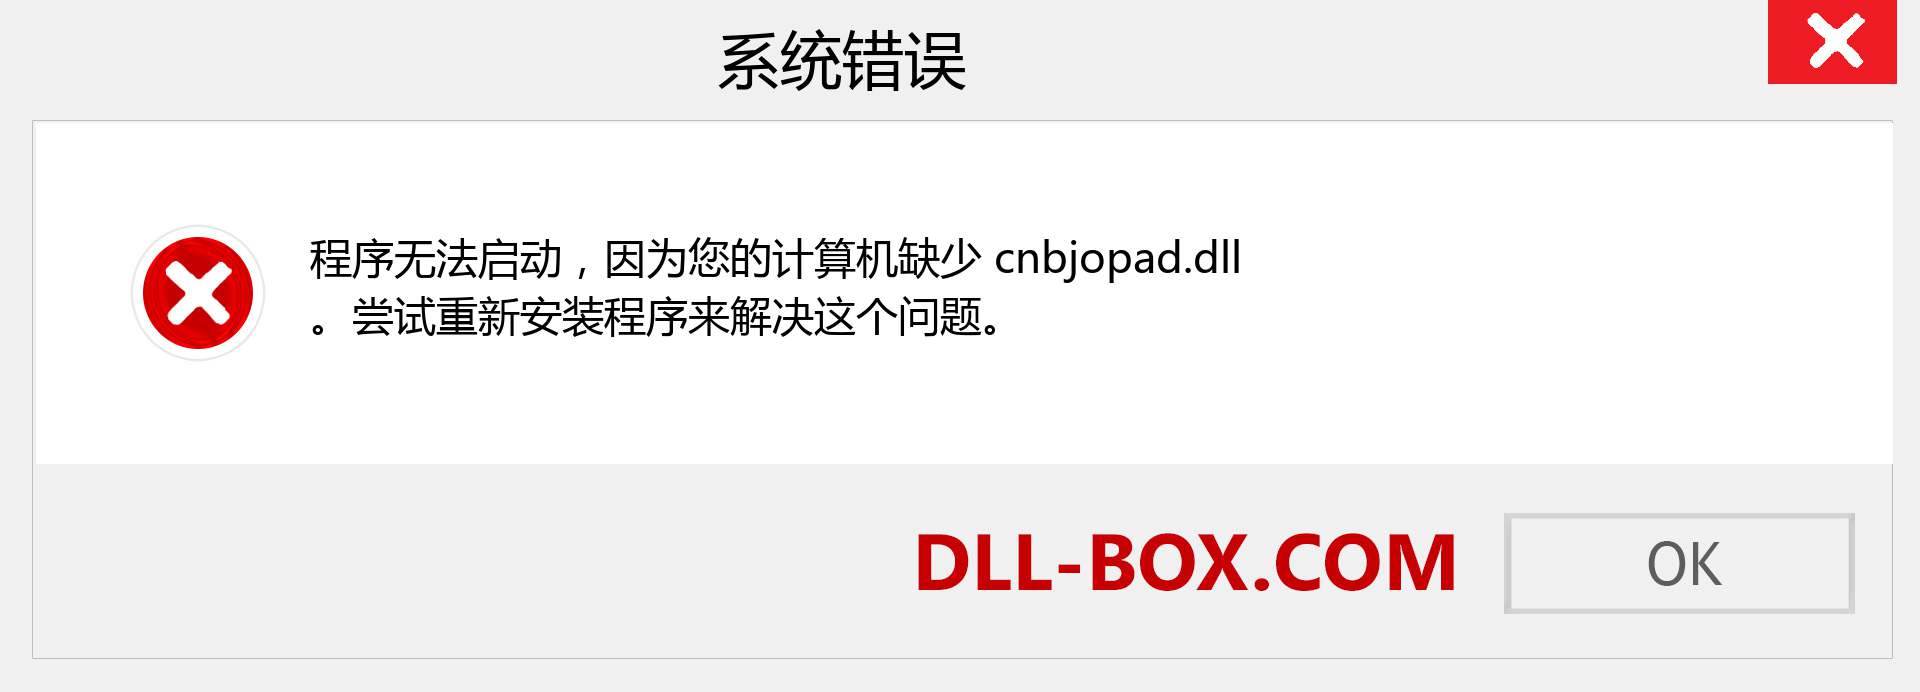 cnbjopad.dll 文件丢失？。 适用于 Windows 7、8、10 的下载 - 修复 Windows、照片、图像上的 cnbjopad dll 丢失错误